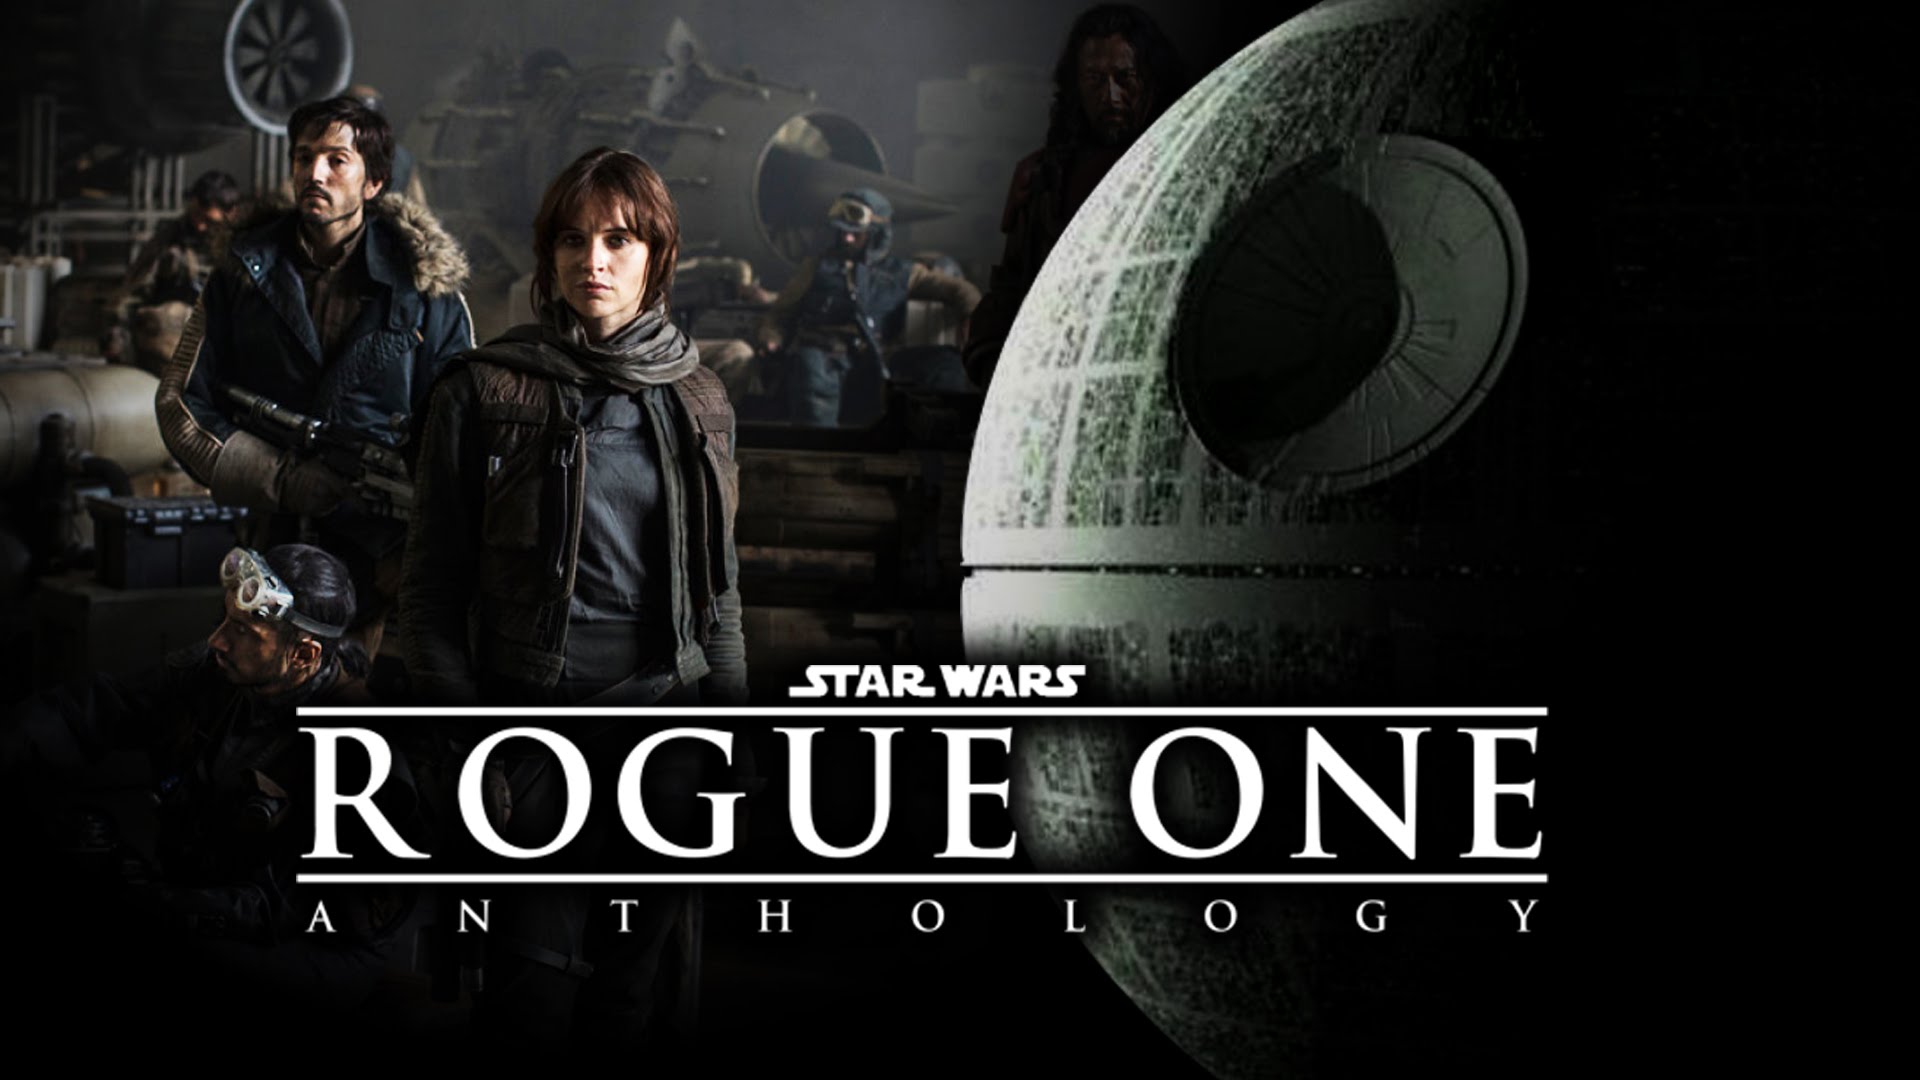 Star Wars: Rogue One Online Film Full HD